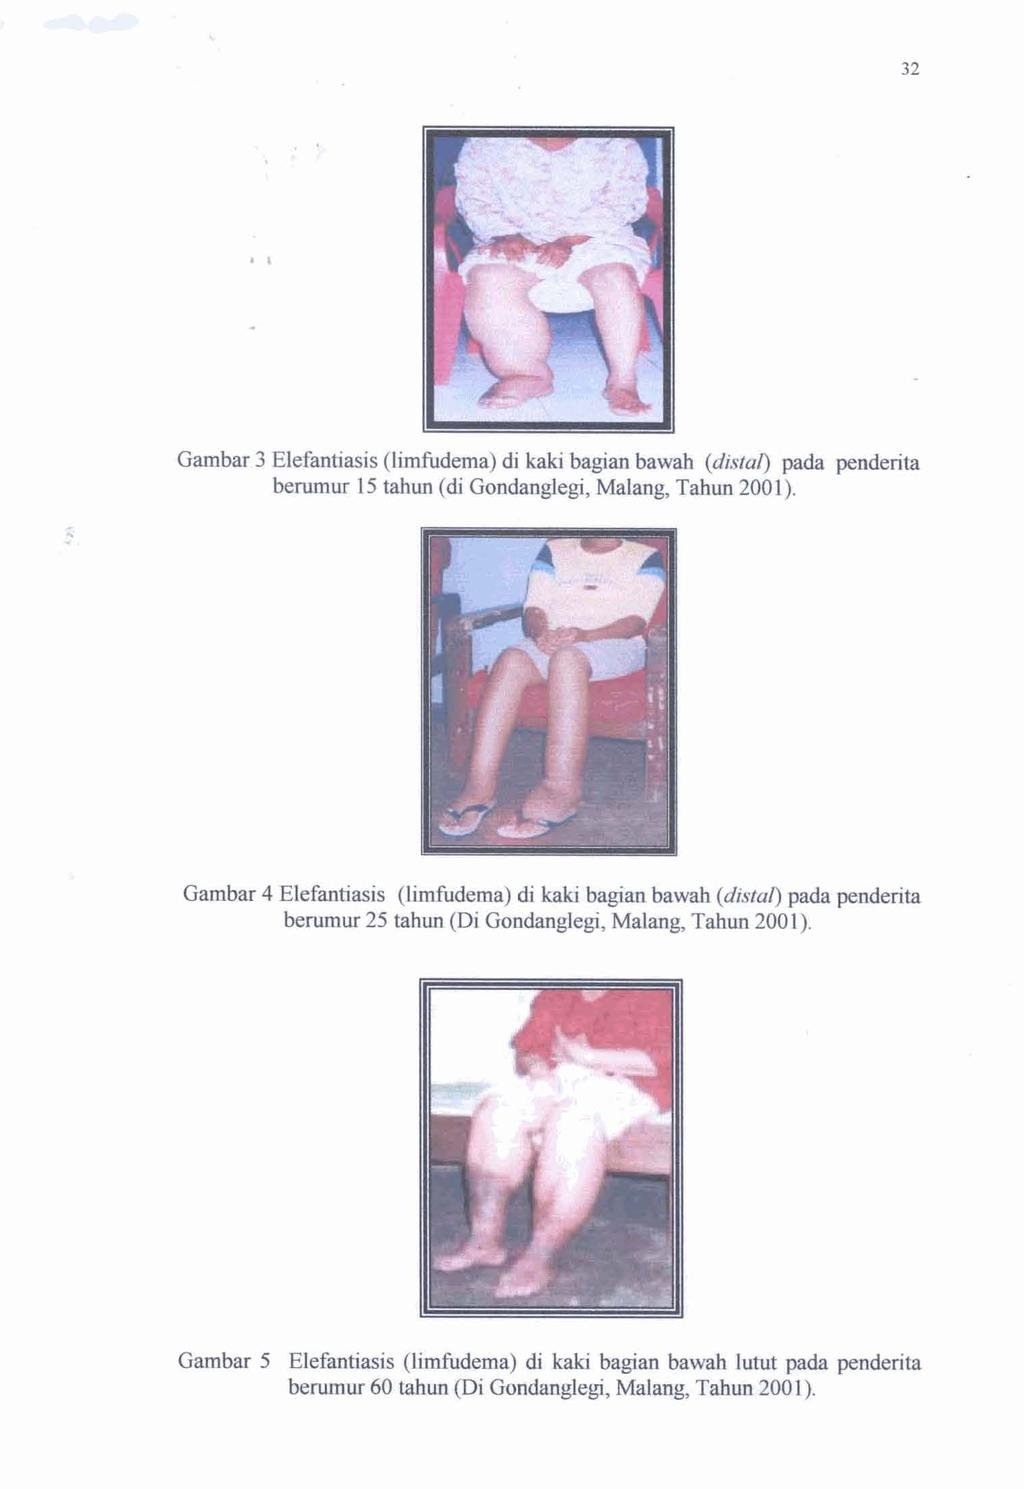 Gambar 3 Elefantiasis (limfbdema) di kaki bean bad (disral) pda penderita be~mur 15 tahun (di Gondanglegi, Malang, Tahun 2001).